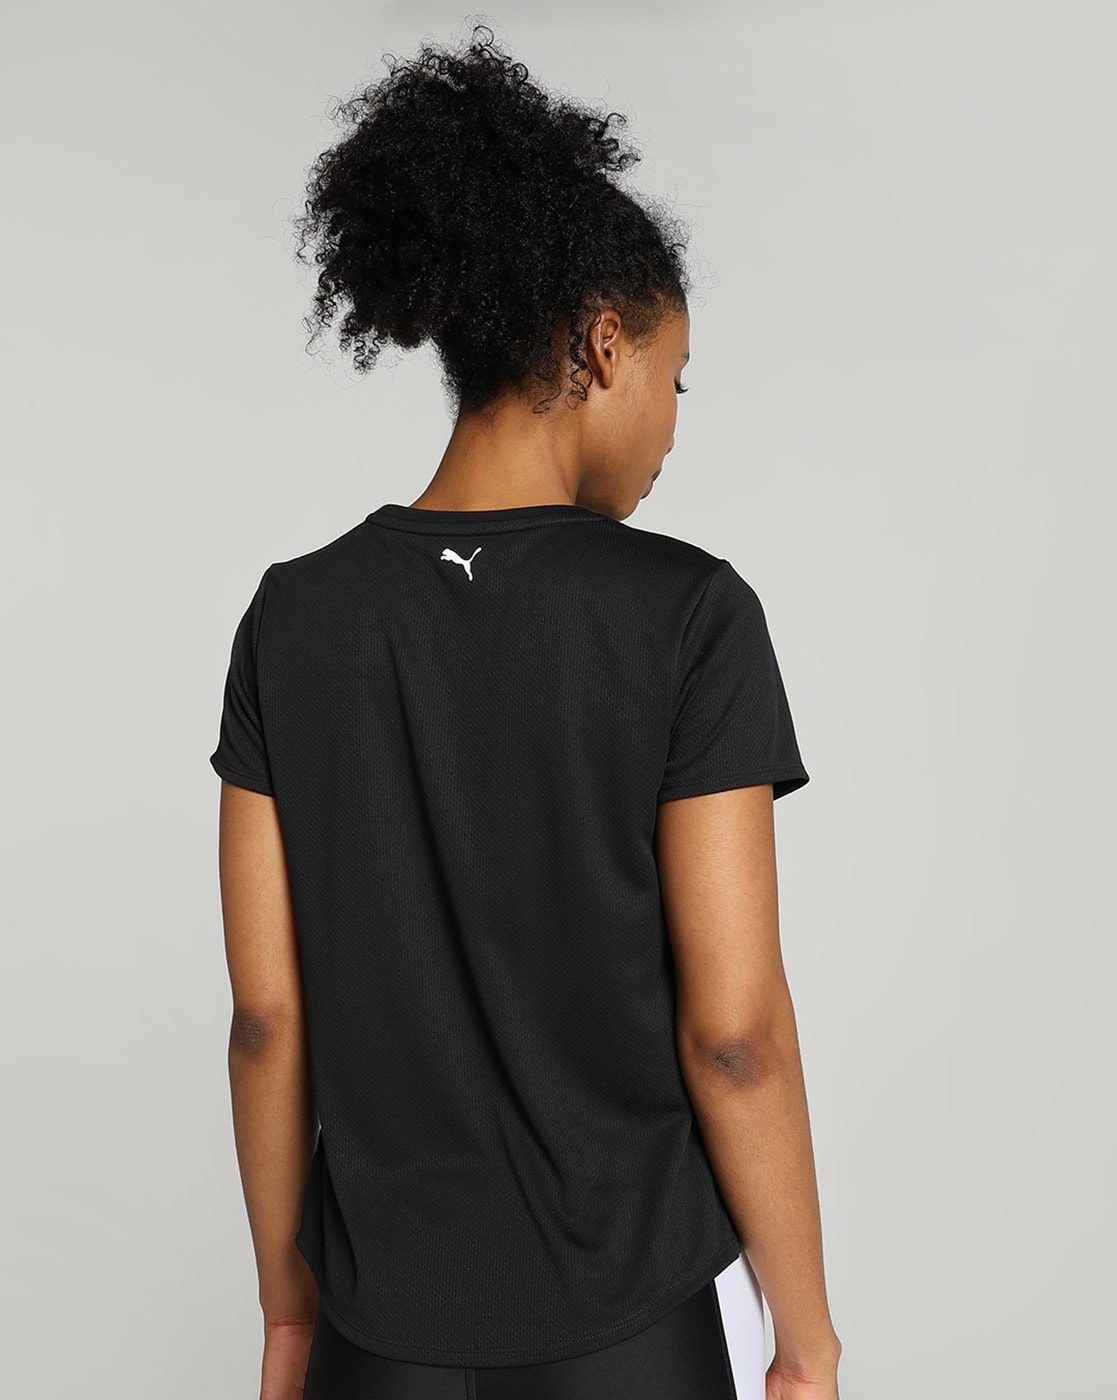 Women Tshirts for by Black Online Buy PUMA